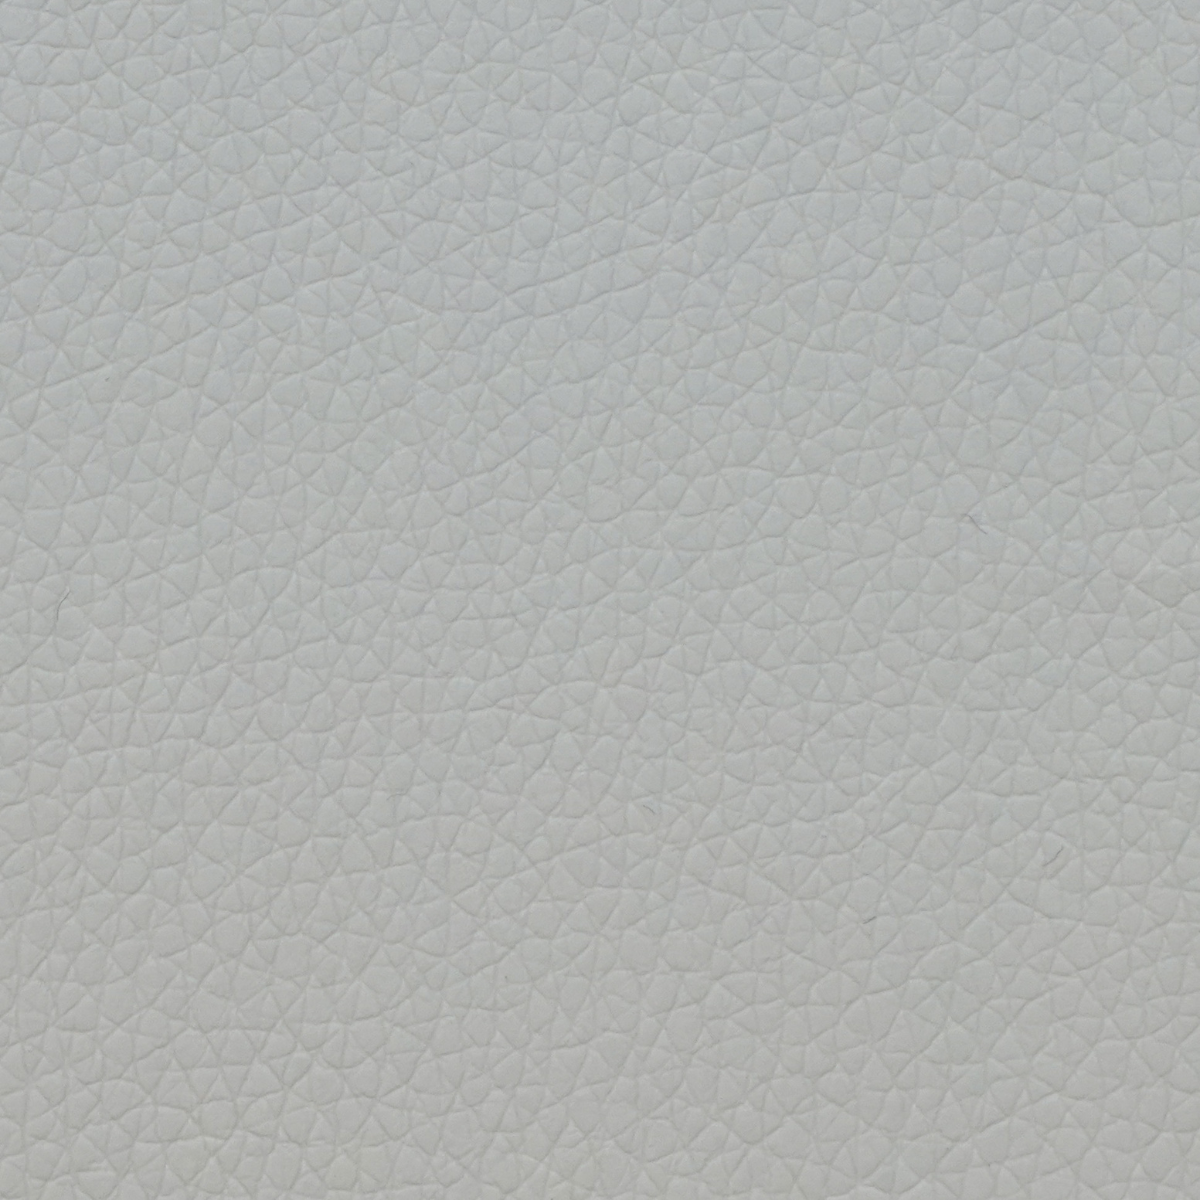 Desk Chair Back Fabric Sample - Gray White